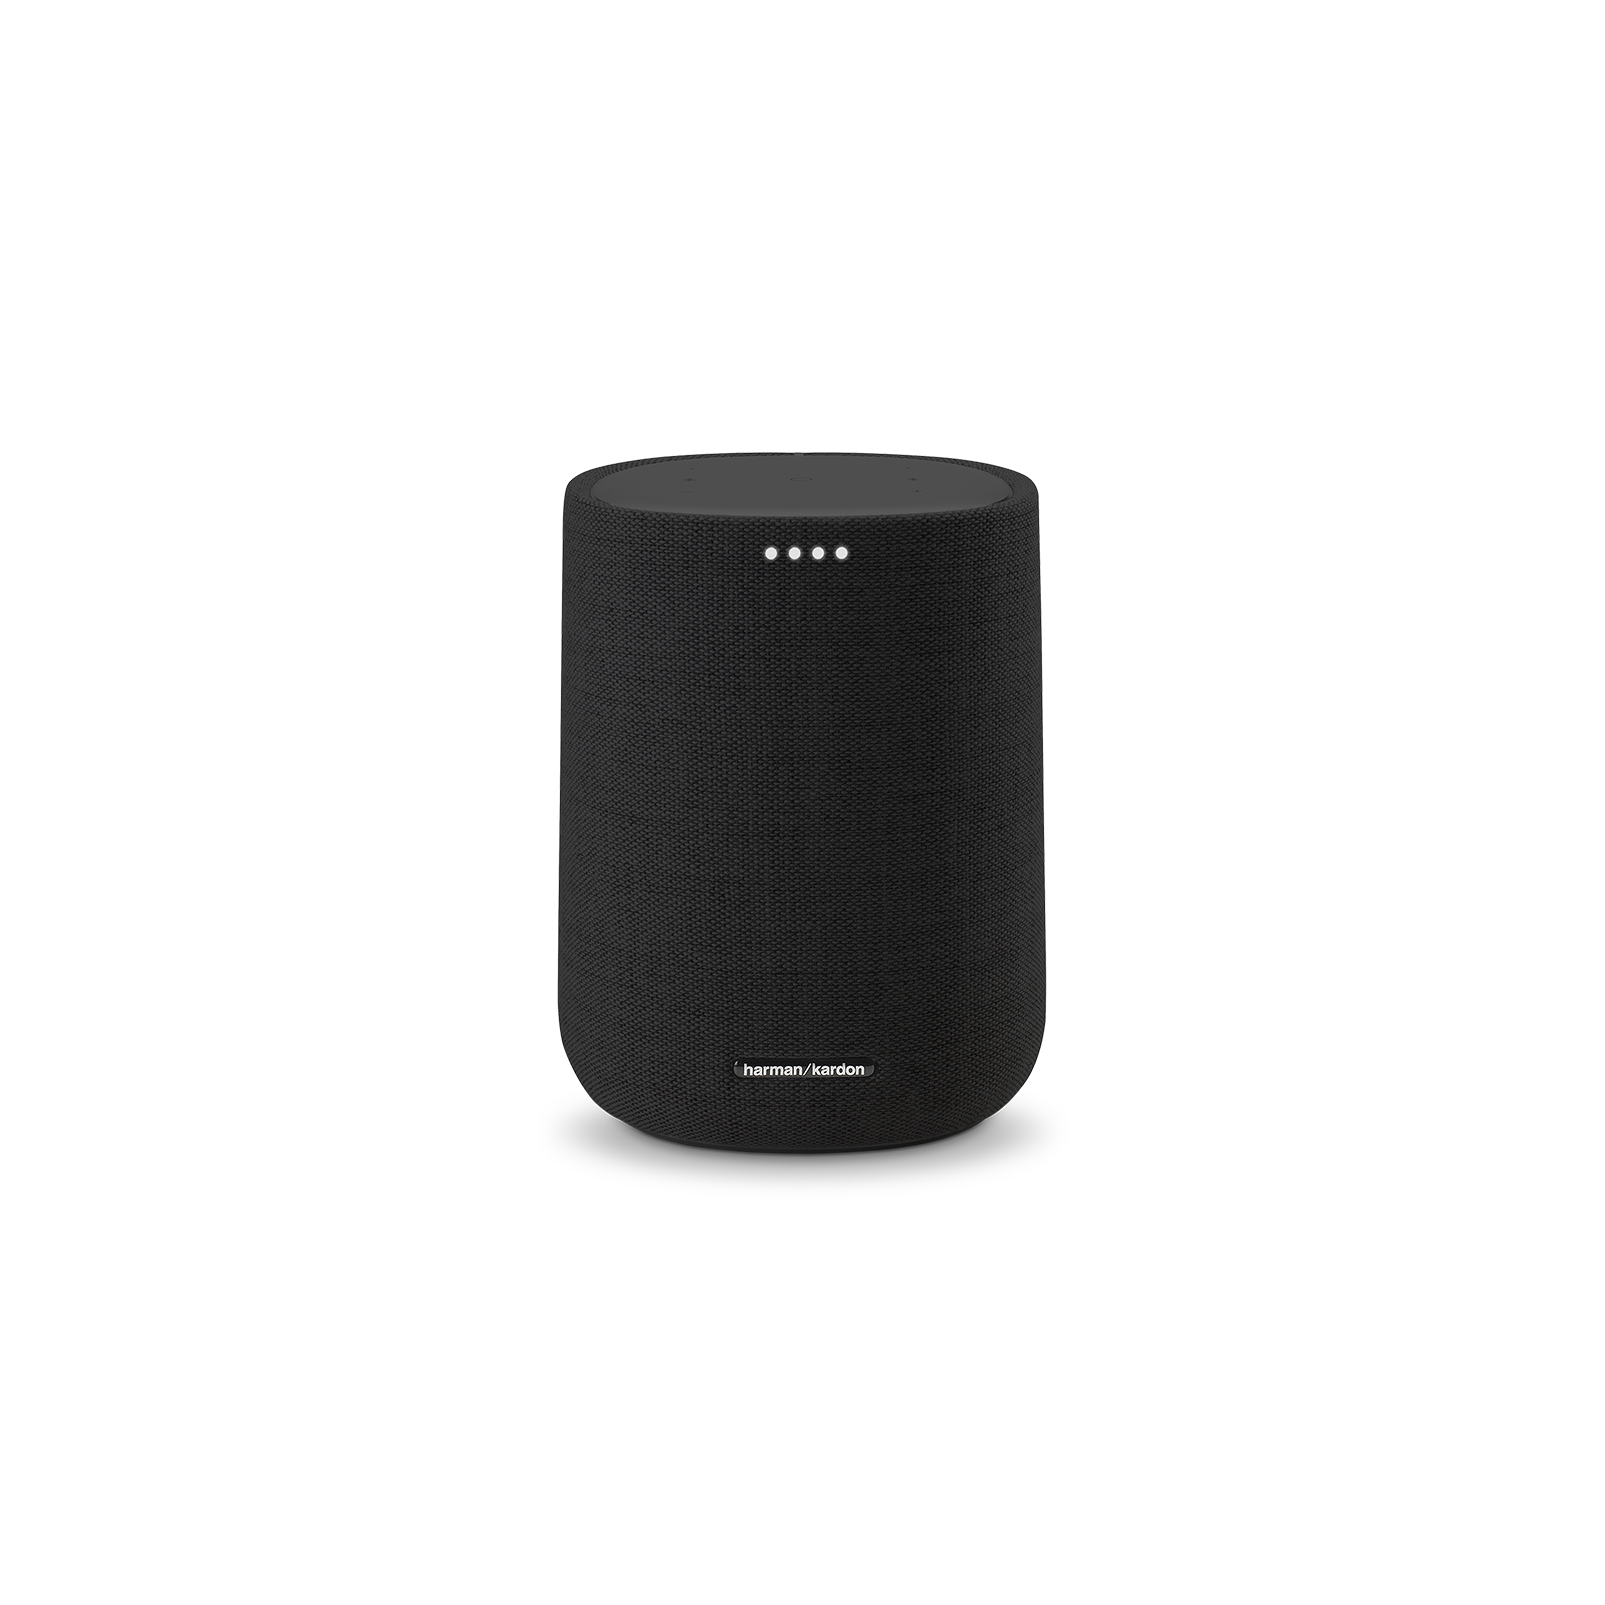 Harman Kardon Citation One MKIII - Black - All-in-one smart speaker with room-filling sound - Front